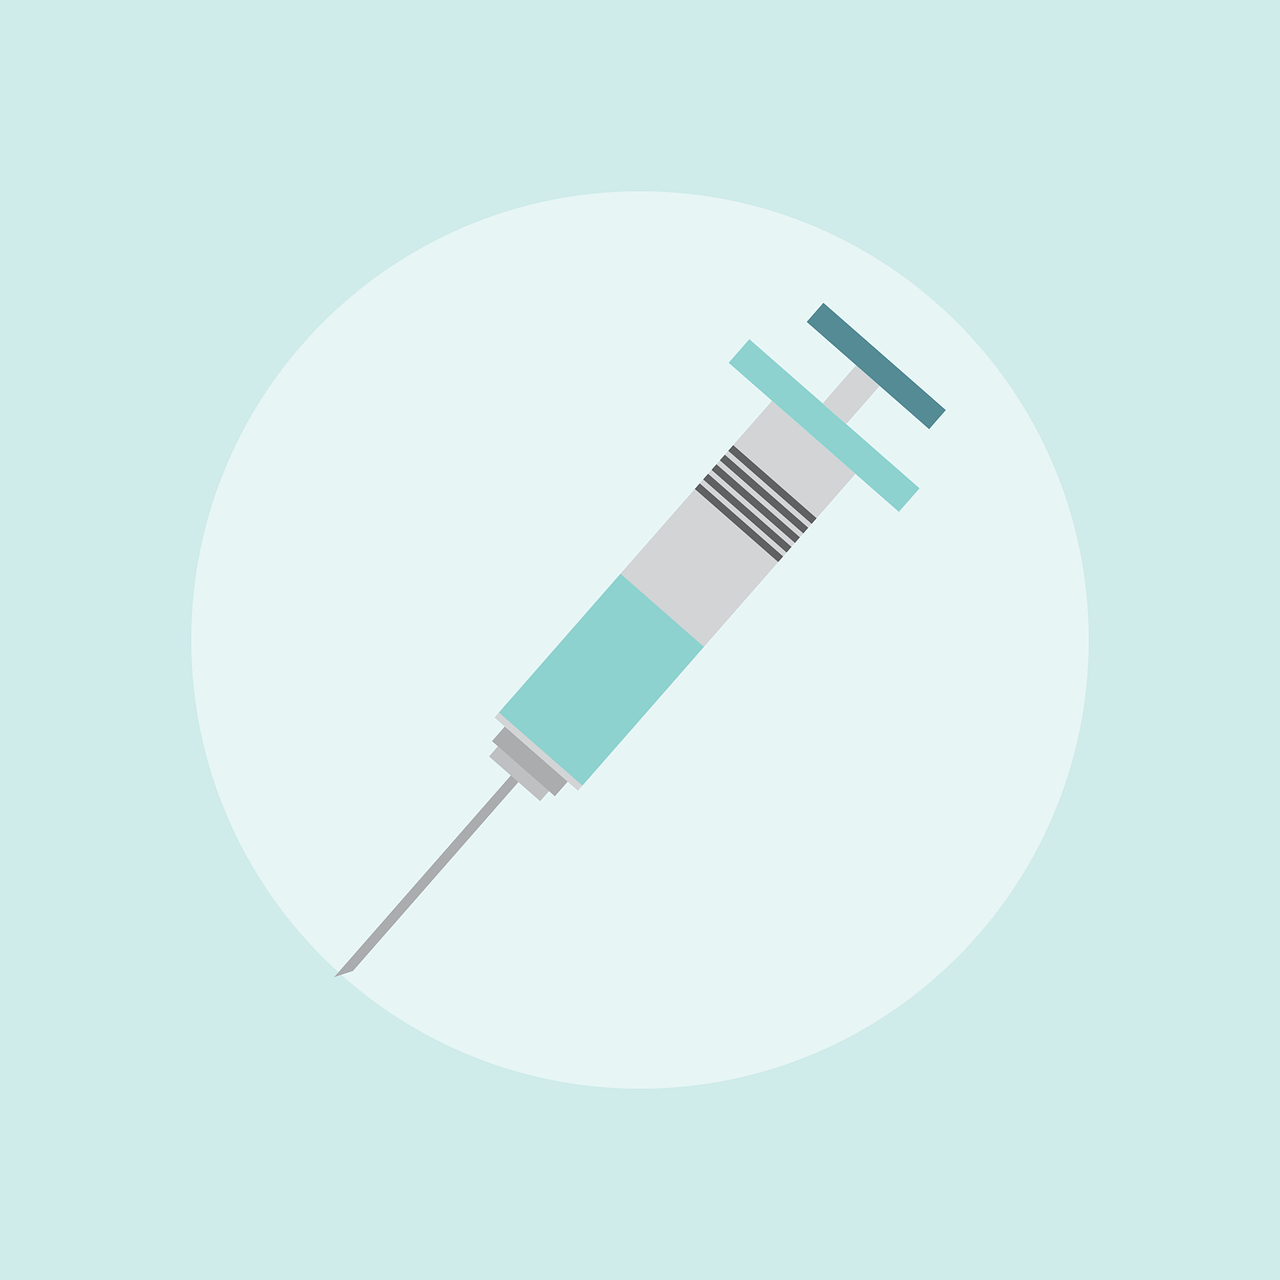 Vaccine legislation increase where outbreaks occured